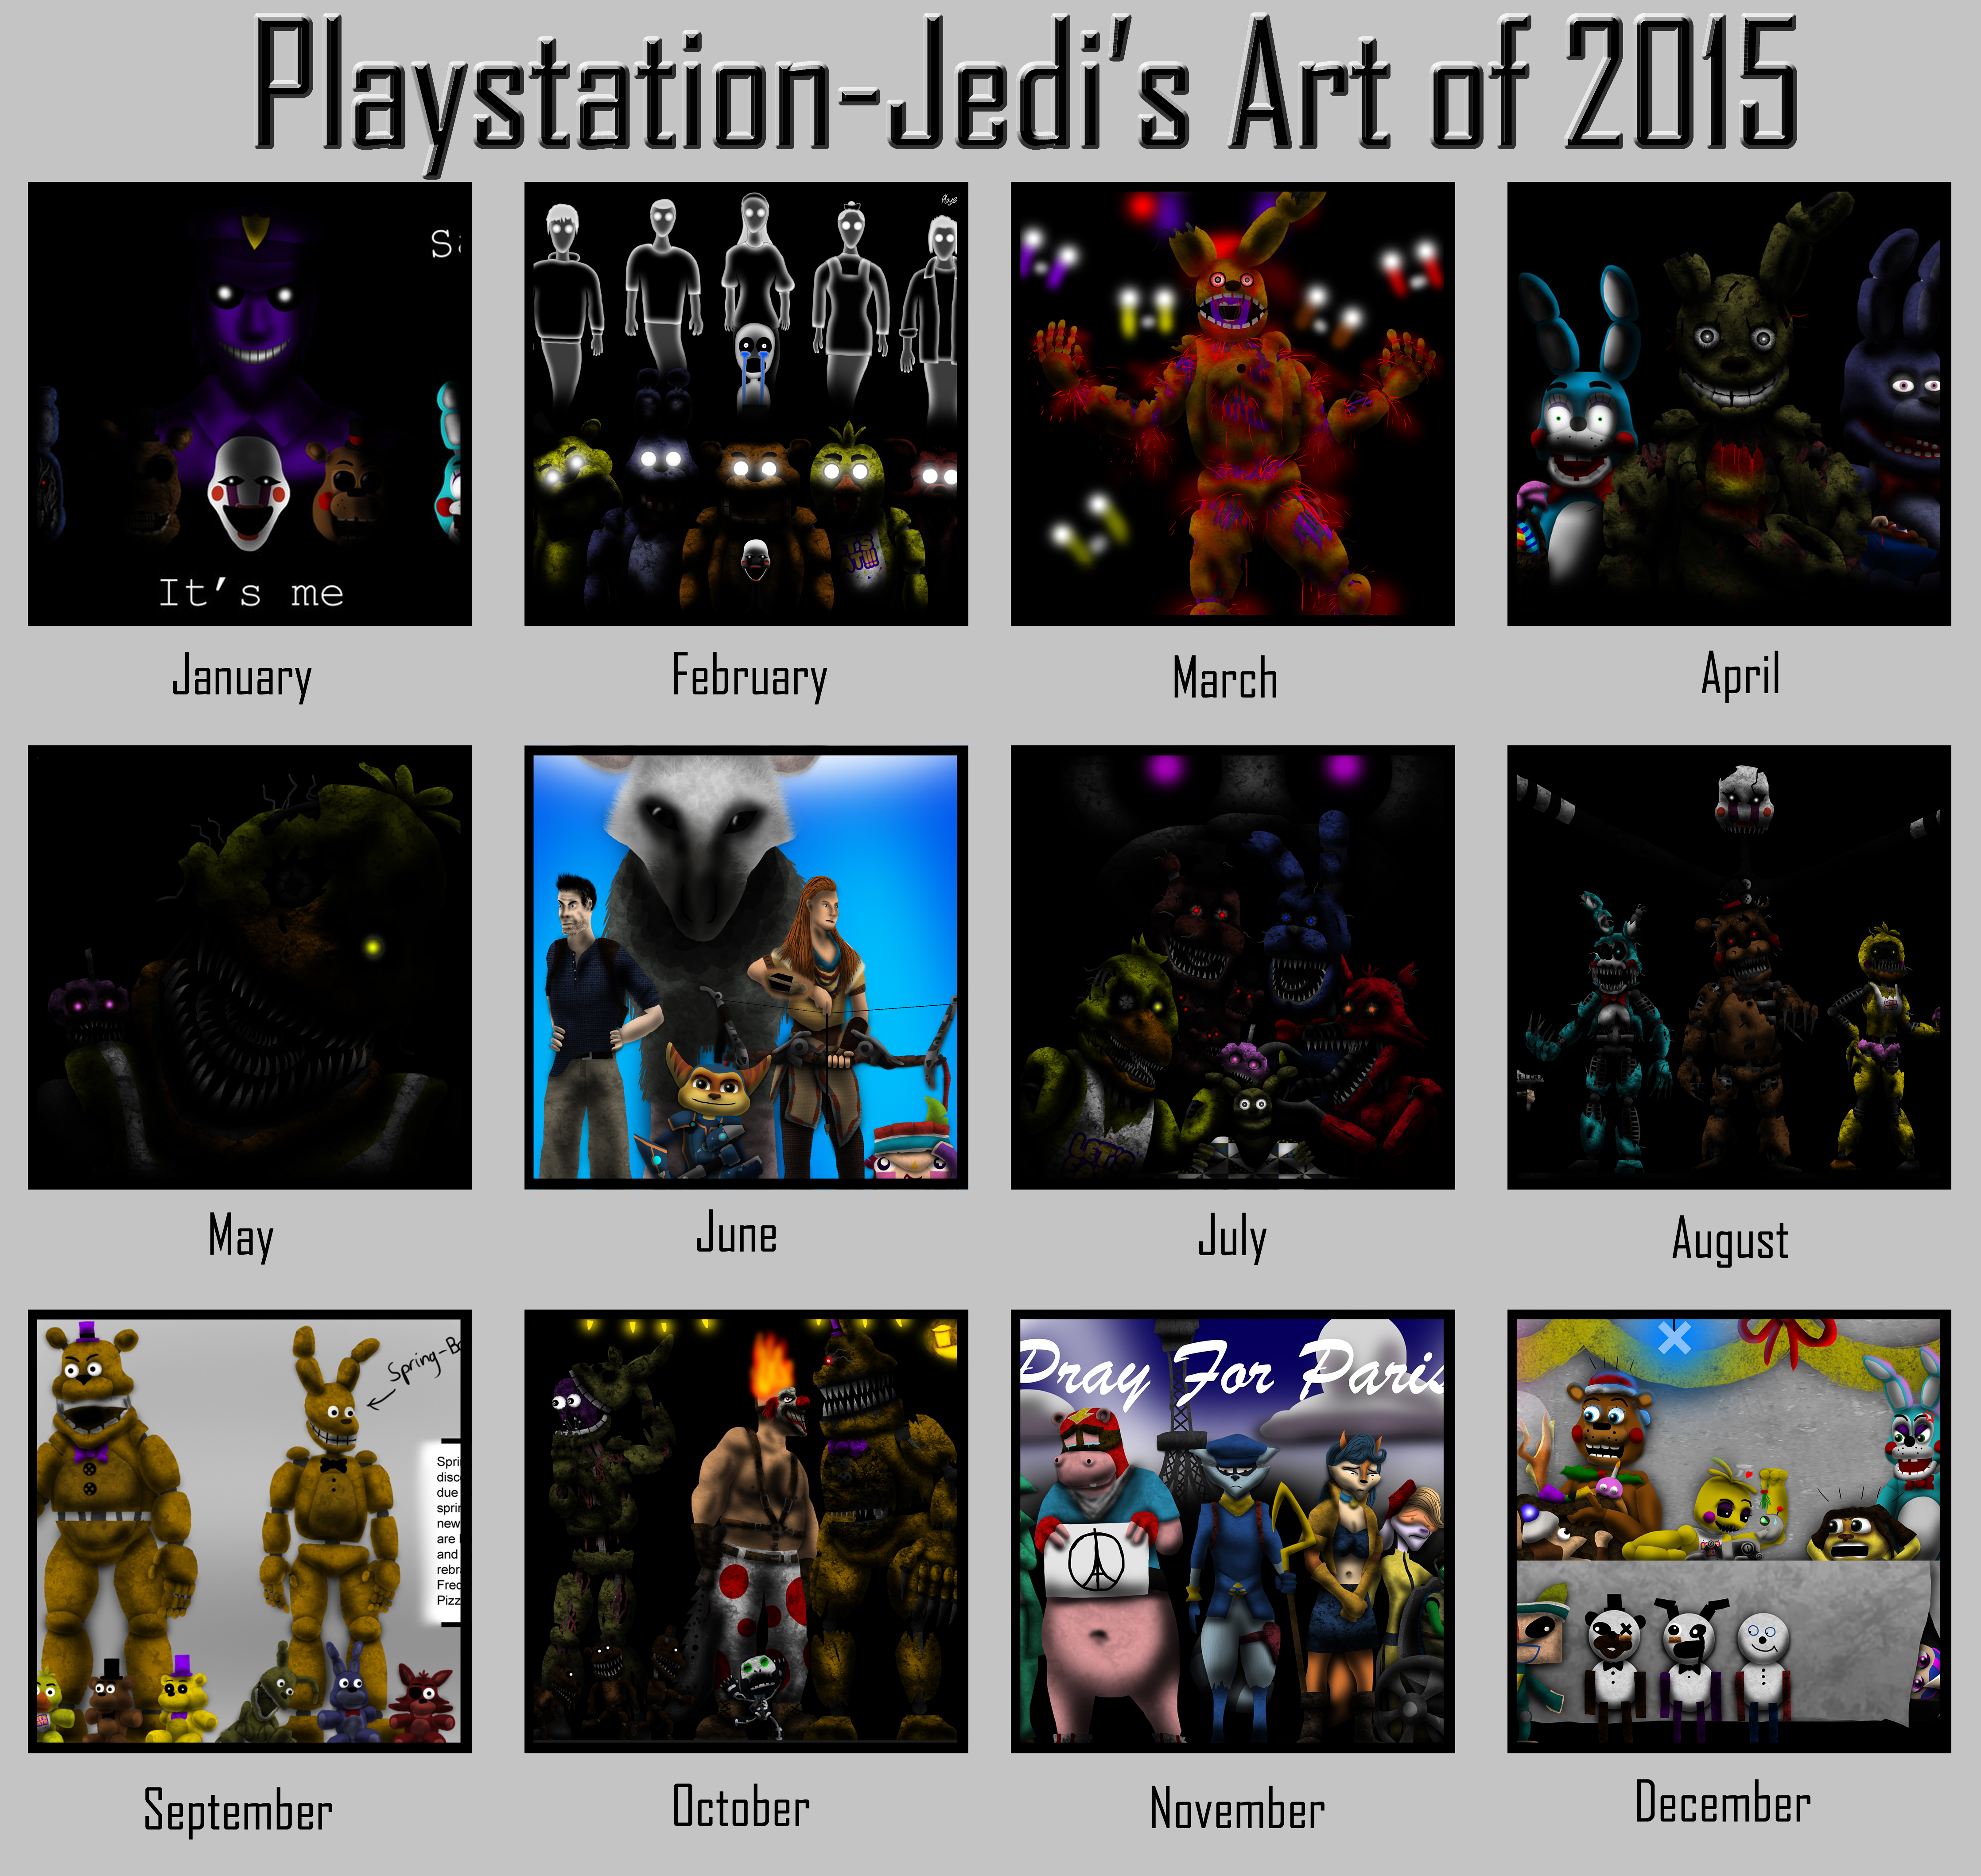 Fan-Made FNaF SB Ruin PS5 trophy list by Playstation-Jedi on DeviantArt